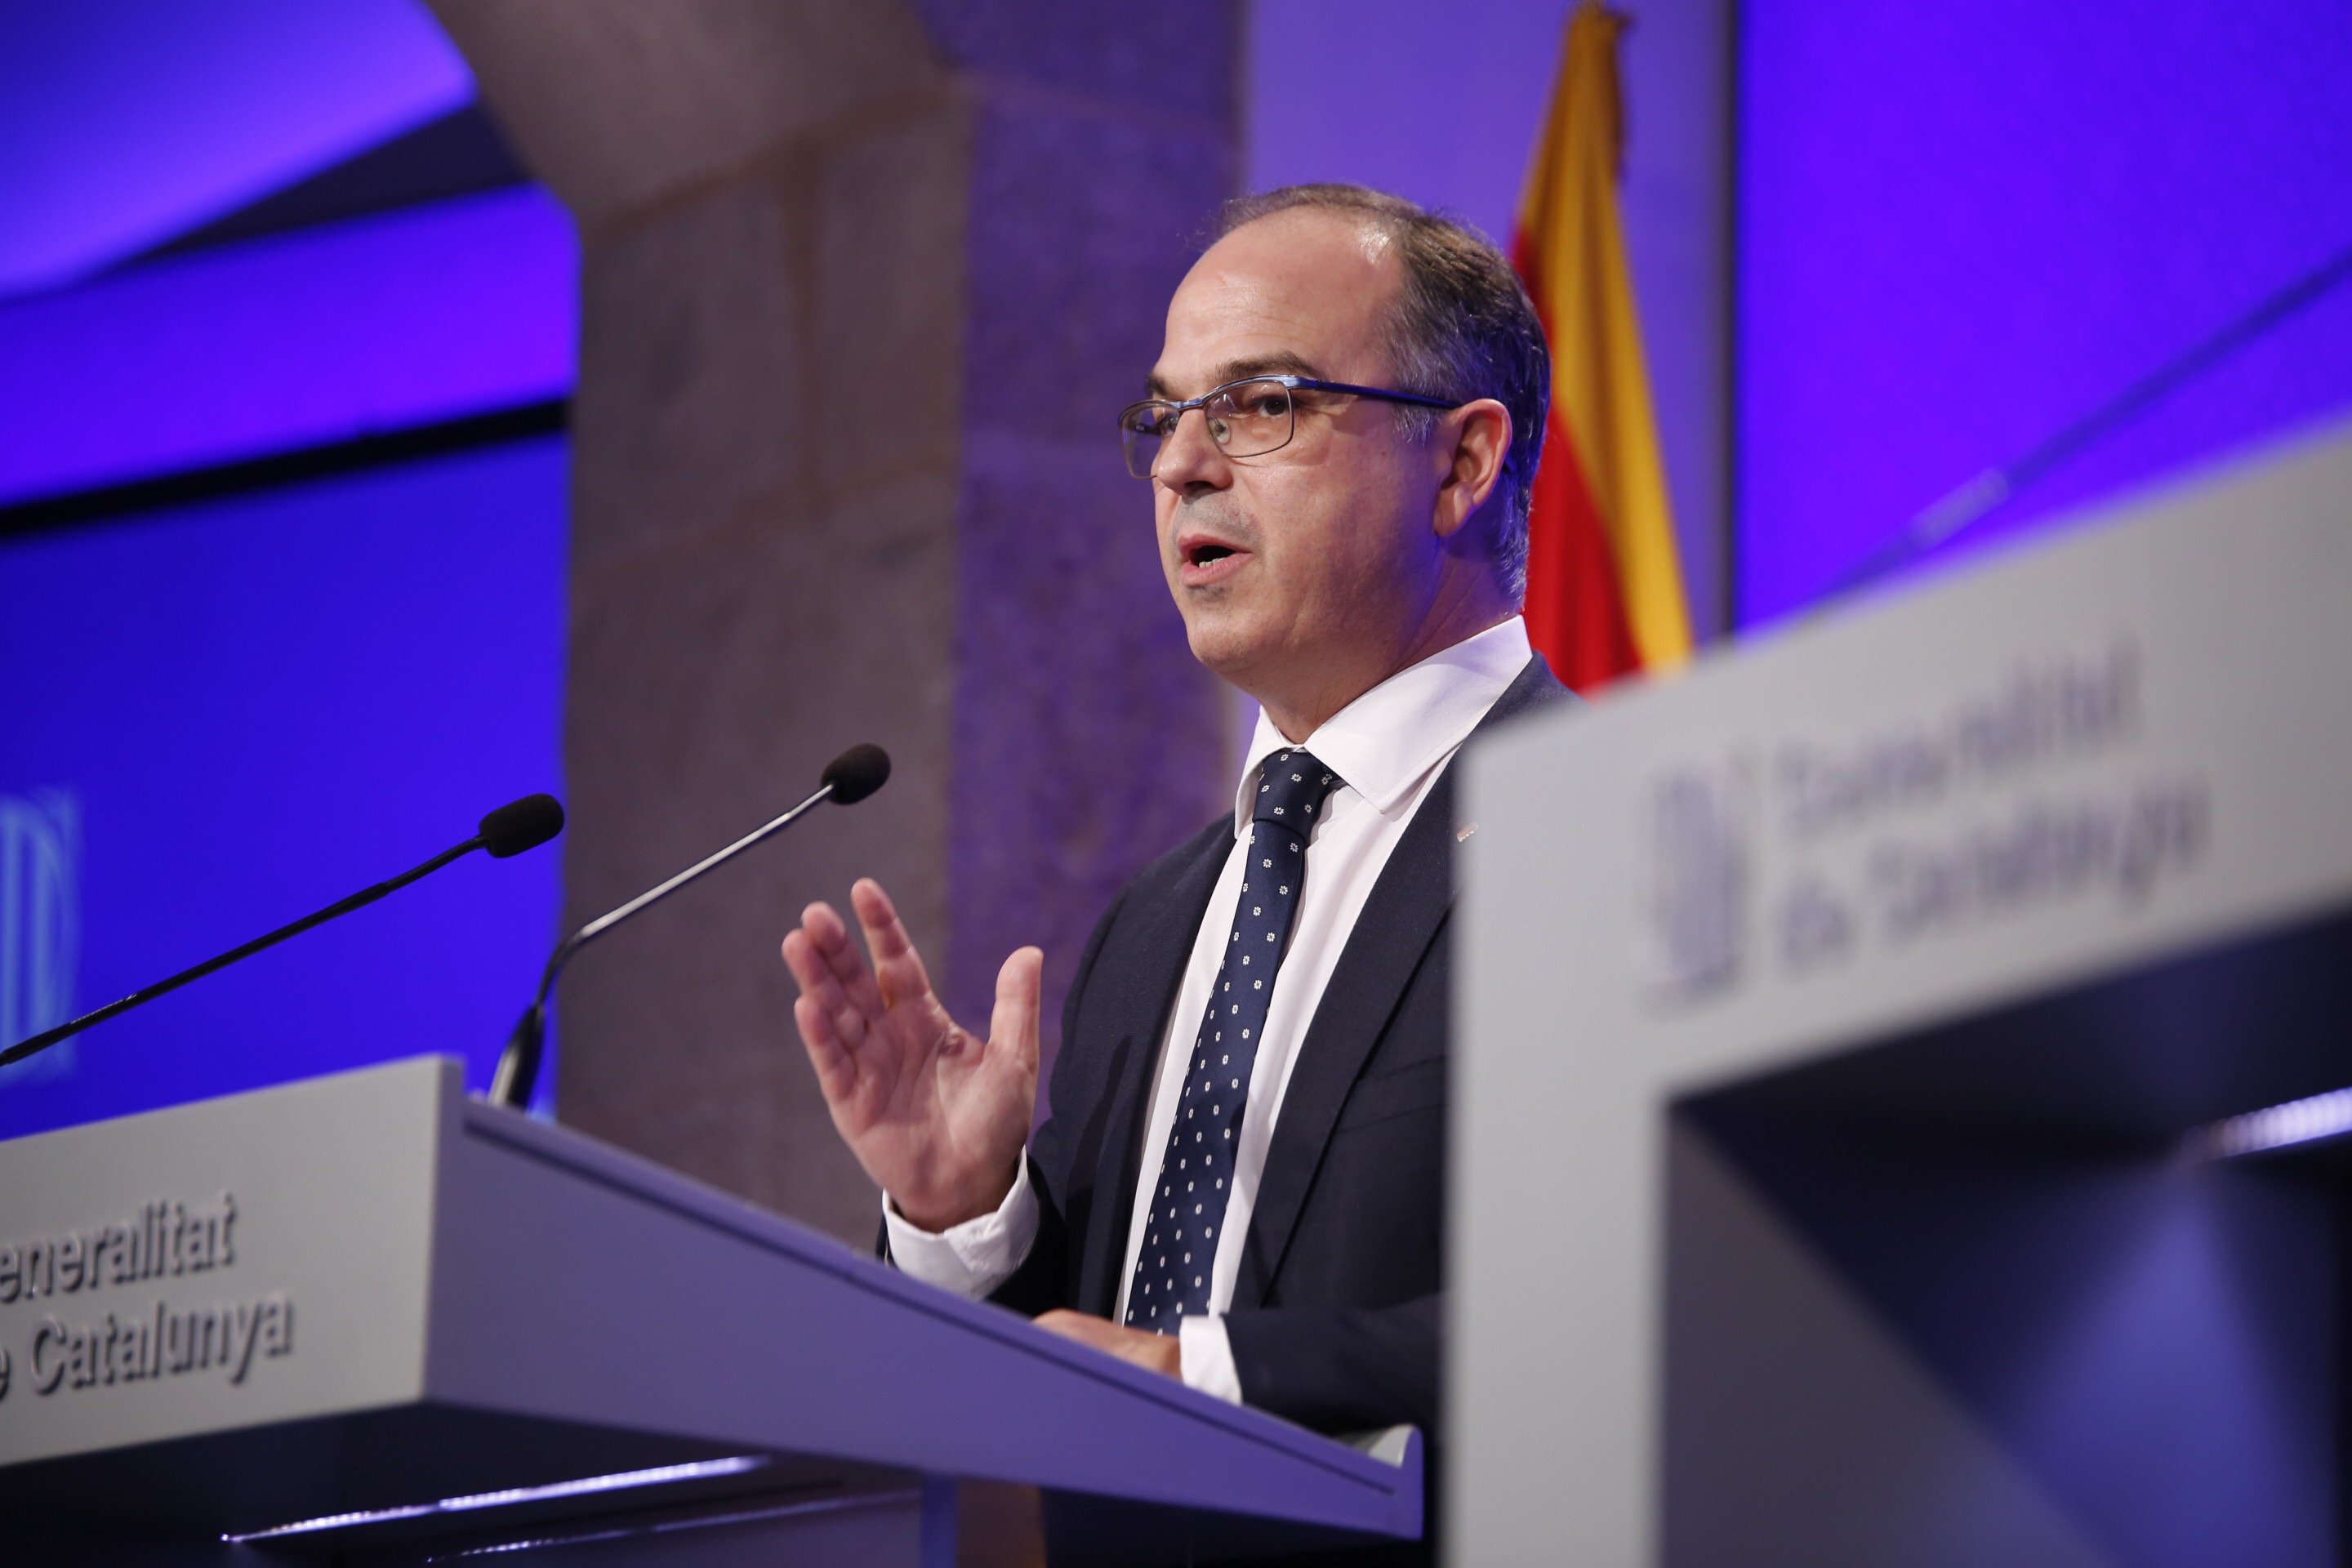 Catalan government maintains dialogue offer, won't renounce referendum mandate